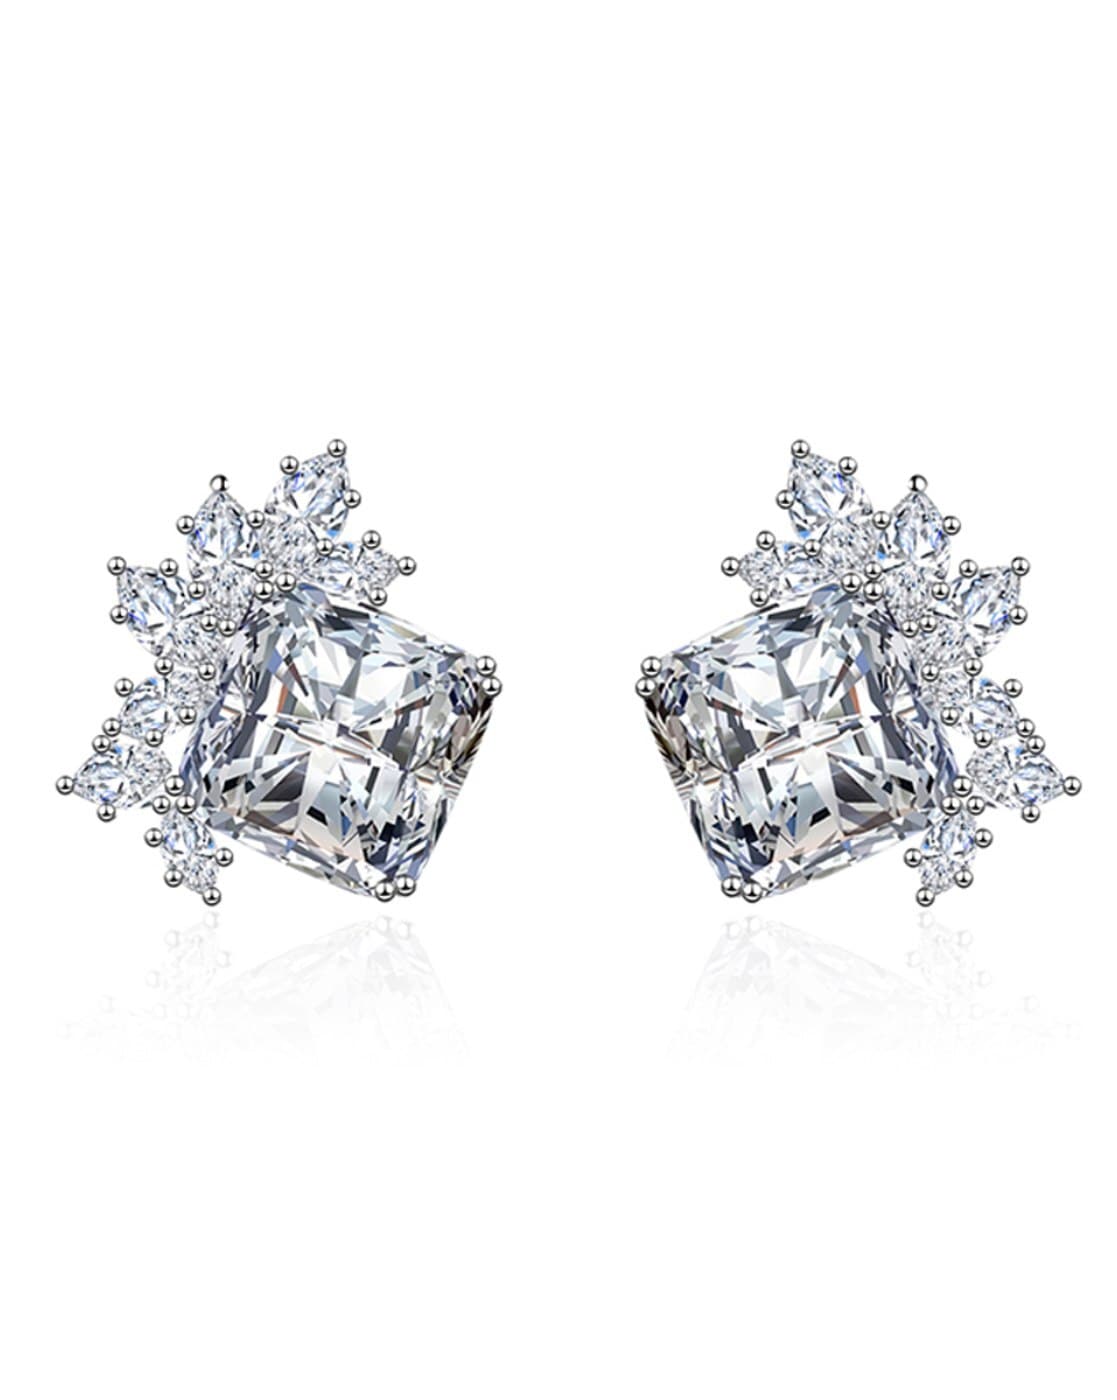 How Big Are 1/4 Carat Diamond Earrings | Most Beautiful Earrings